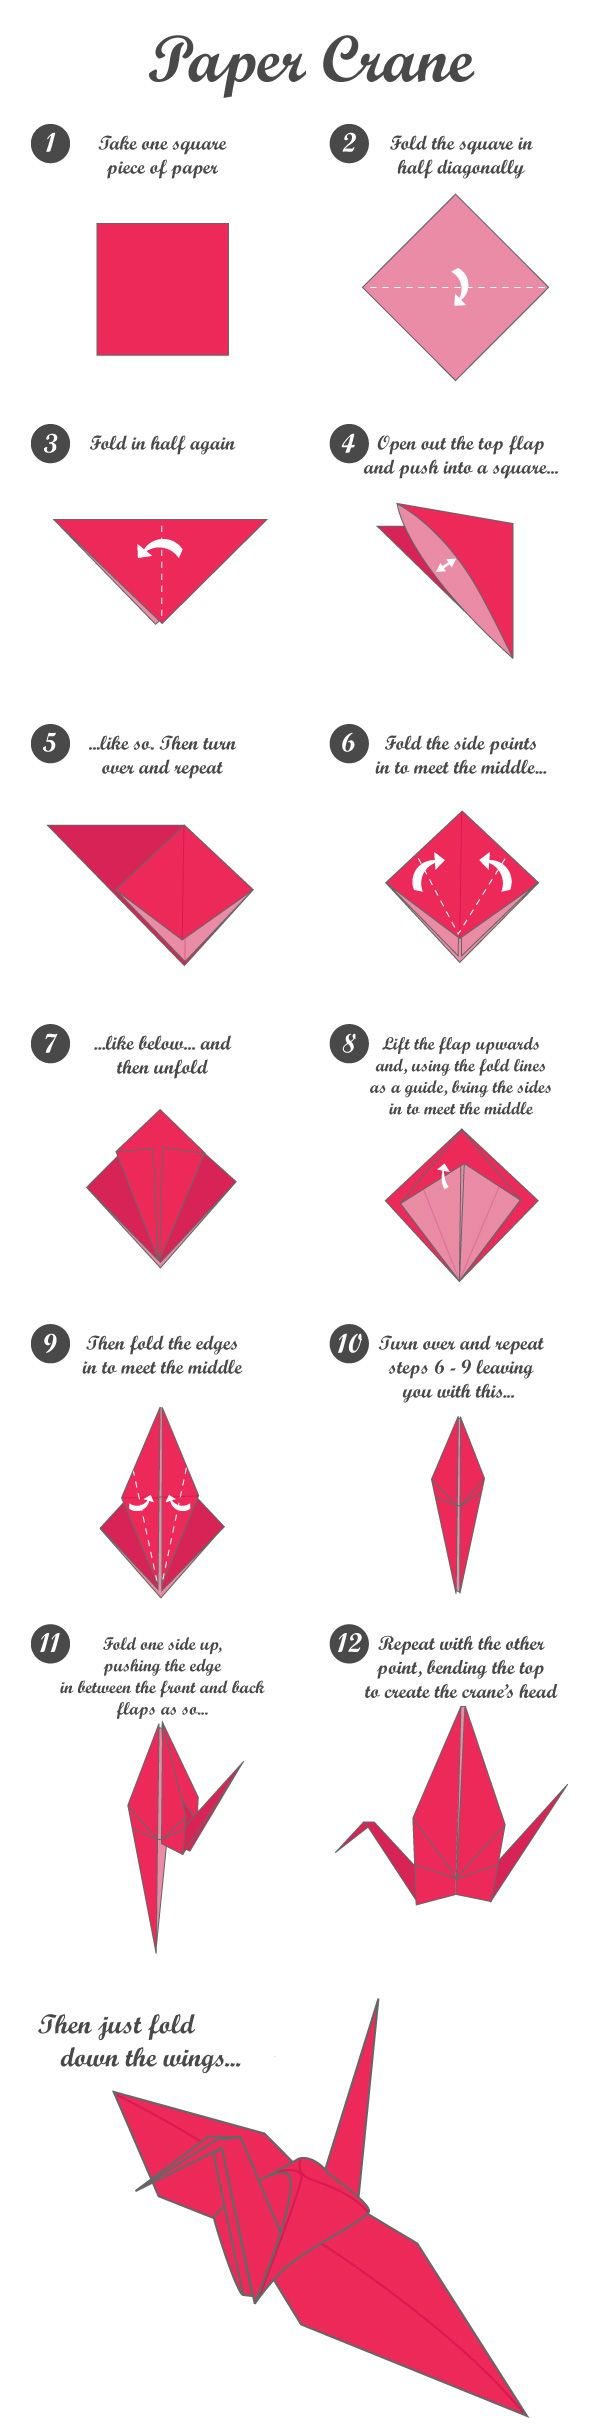 Gum Wrapper Origami Crane 21 Divine Steps How To Make An Origami Crane Tutorial In 2019